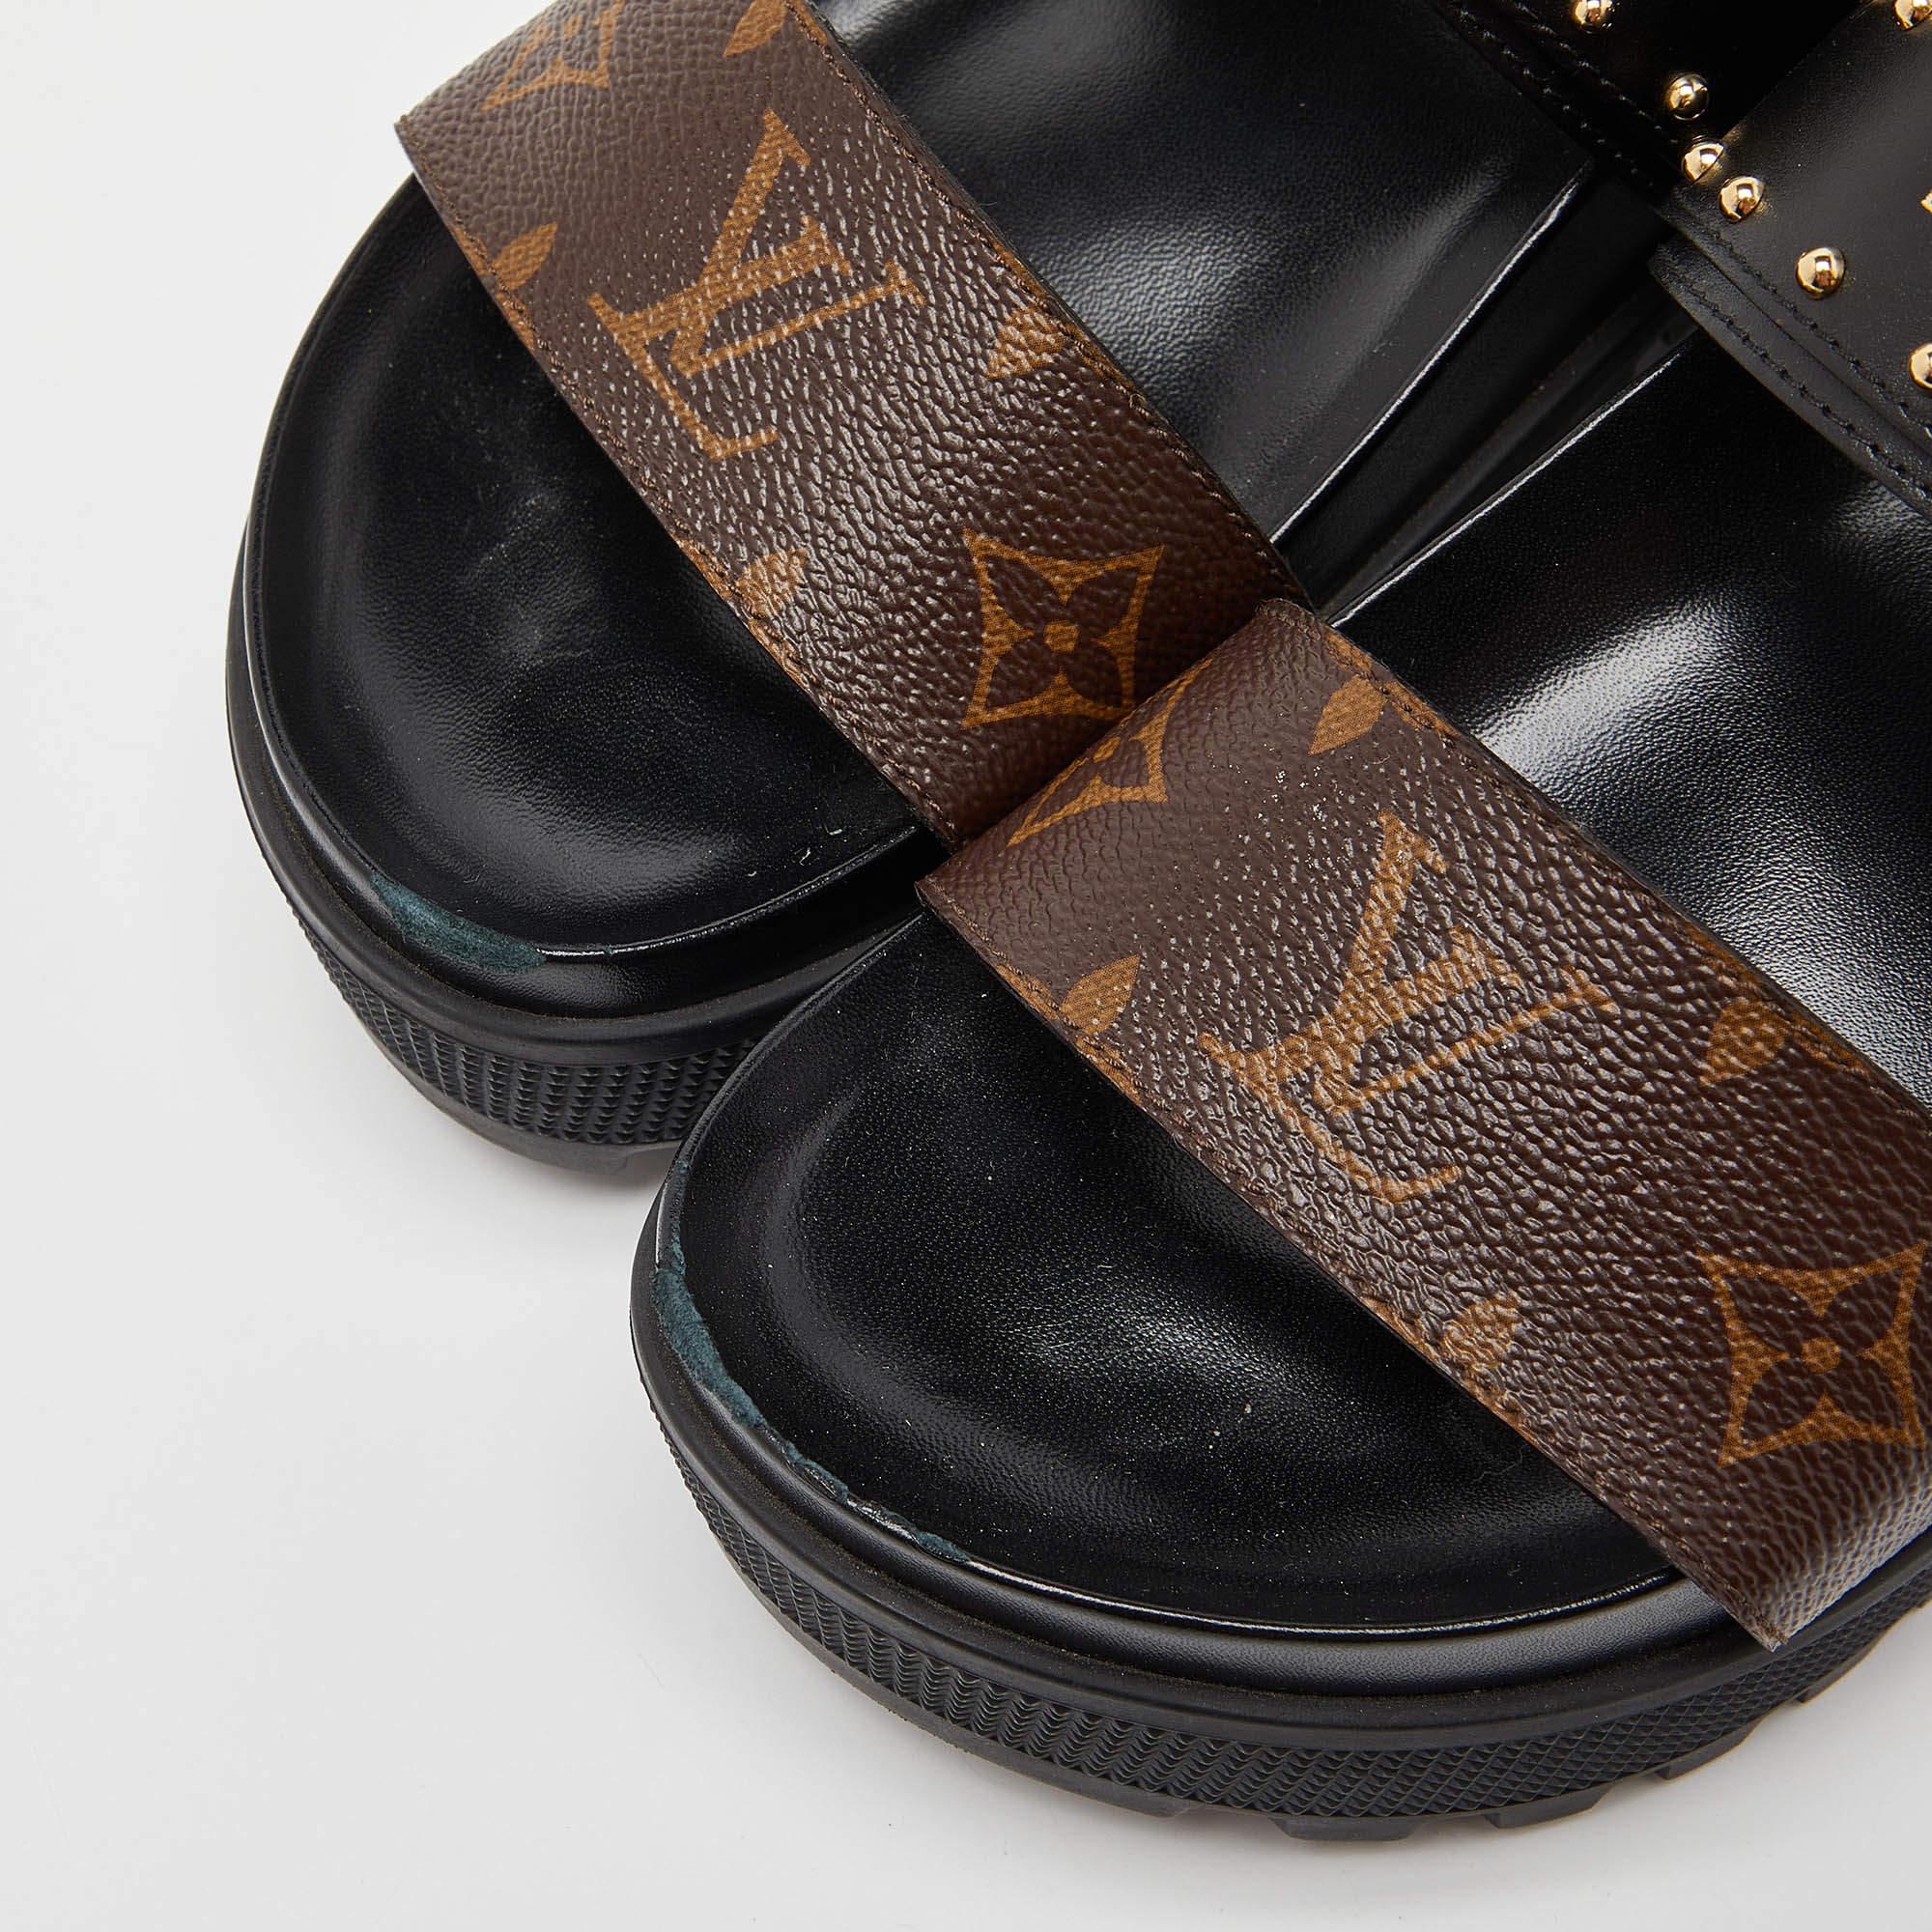 Sunbath leather sandal Louis Vuitton Multicolour size 40 EU in